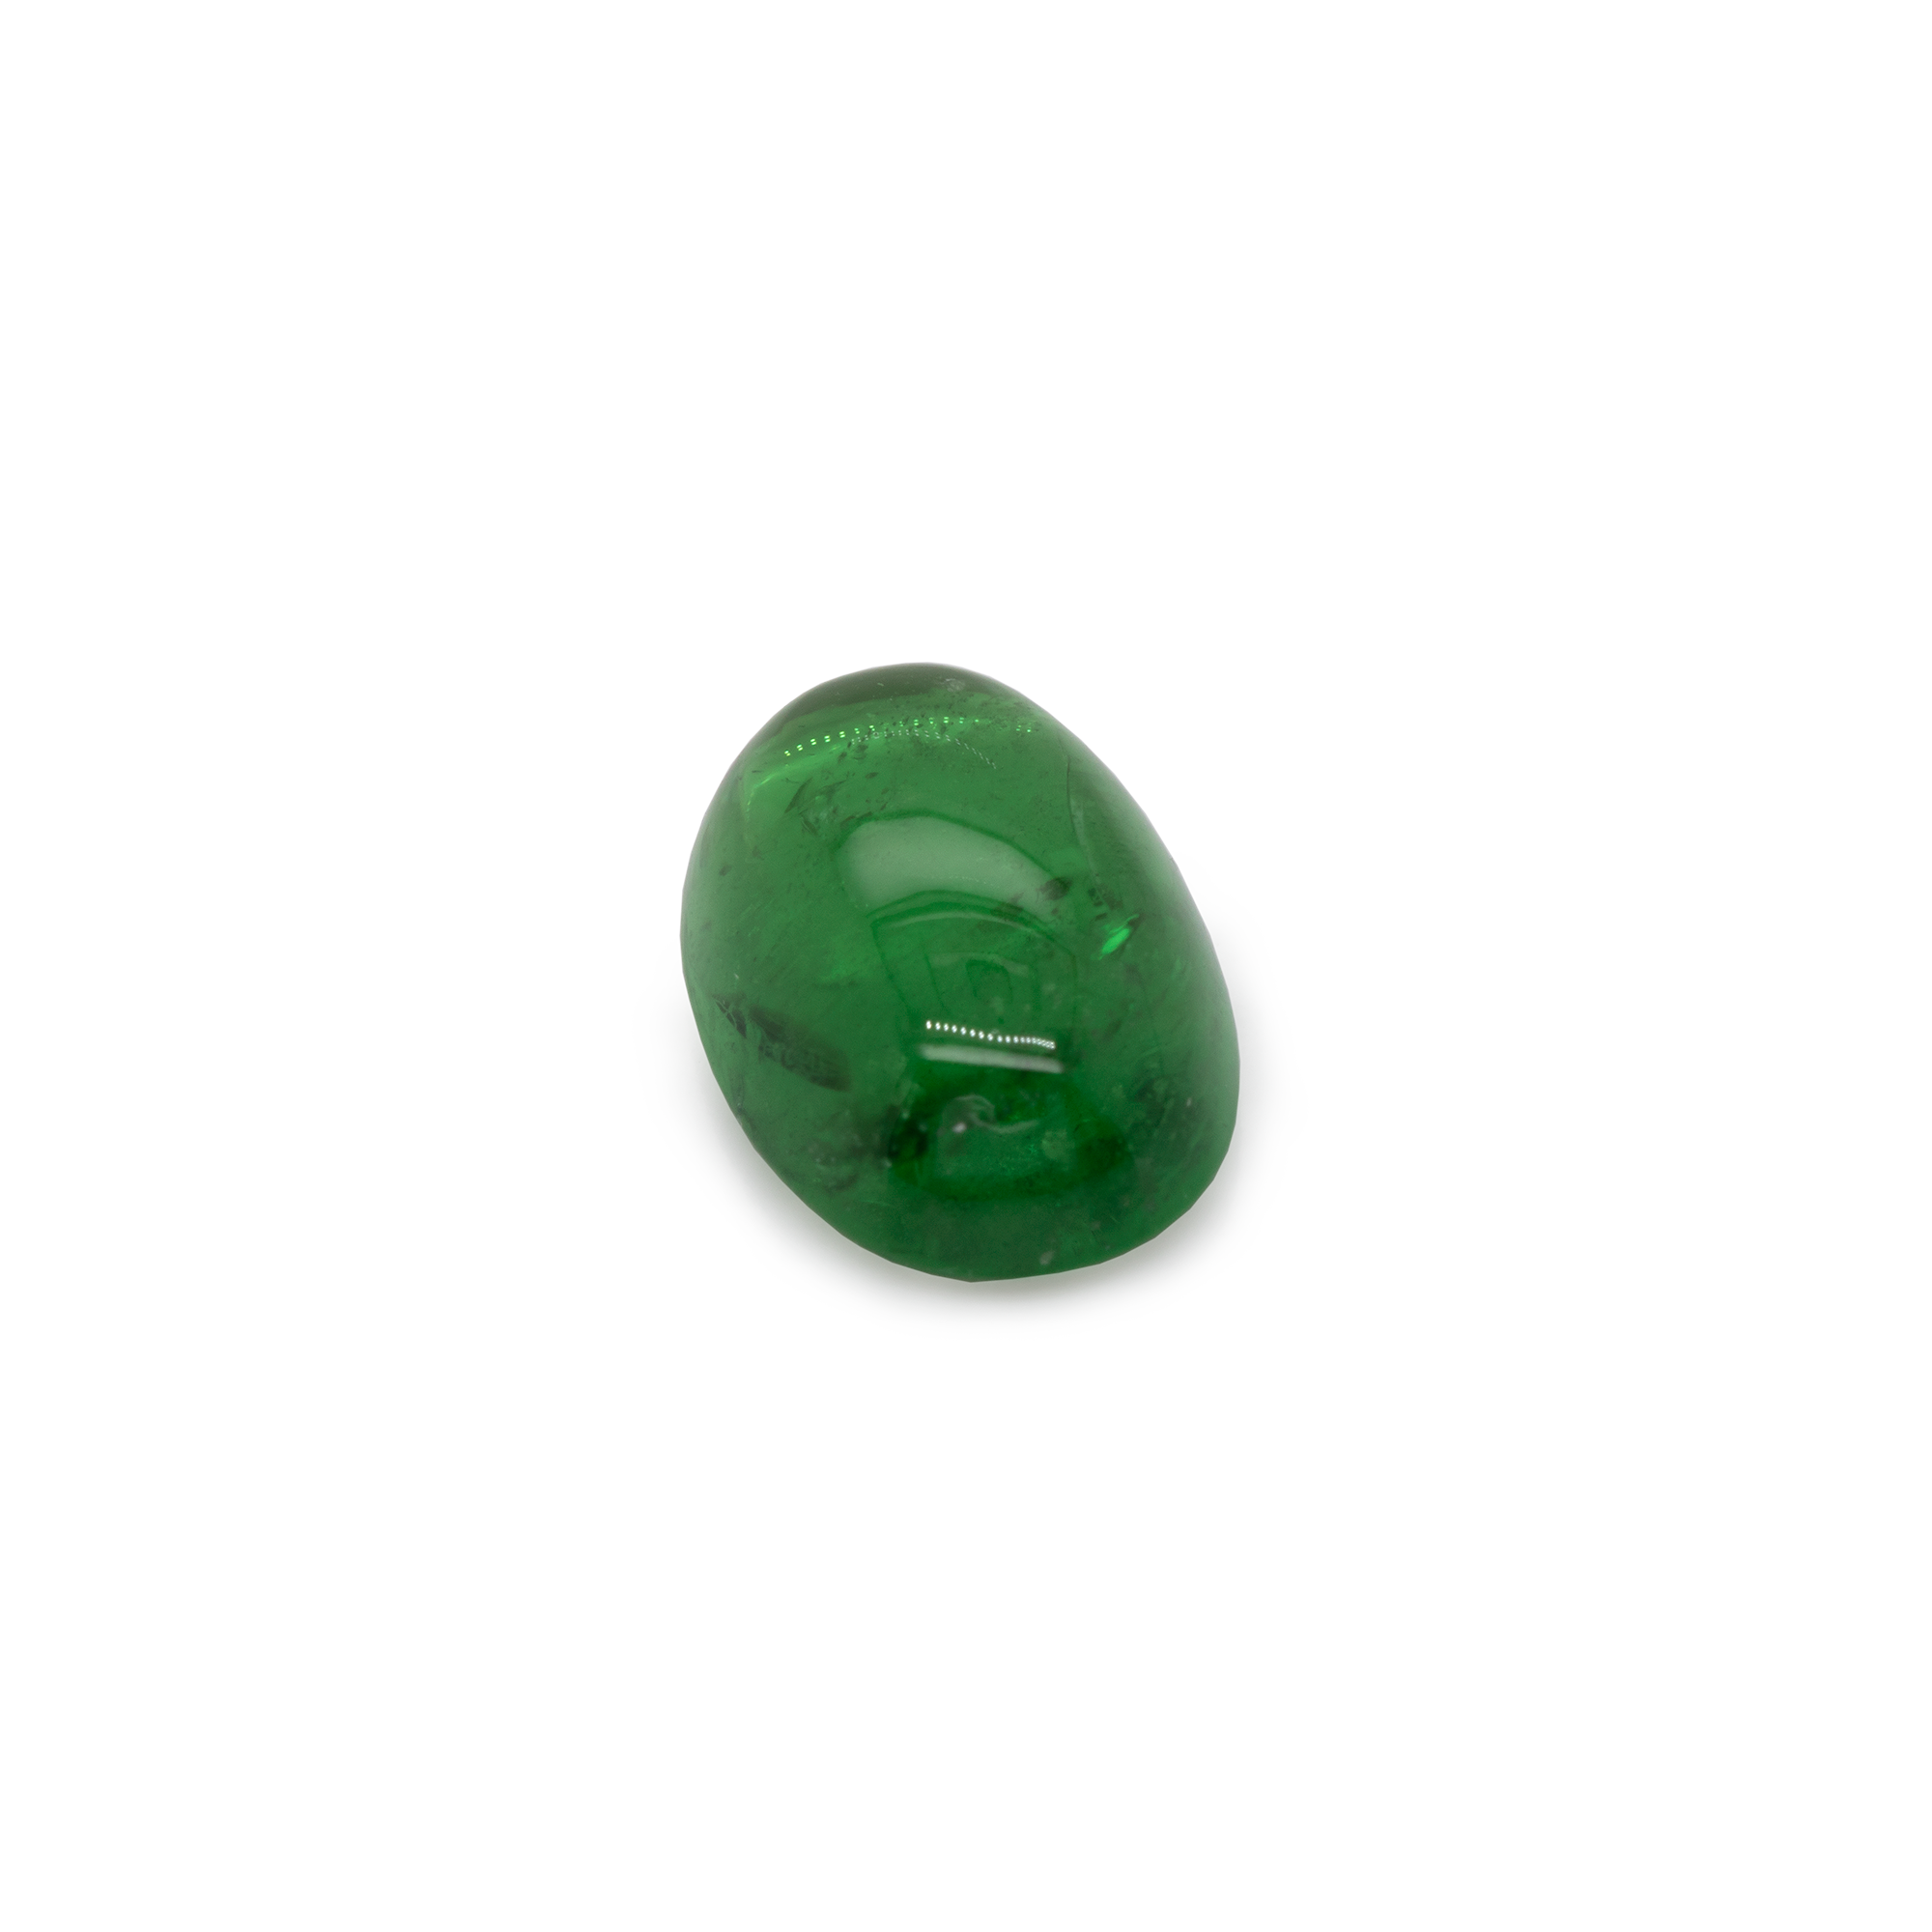 Tsavorit - grün, oval, 13x9 mm, 5,98 cts, Nr. TS22001